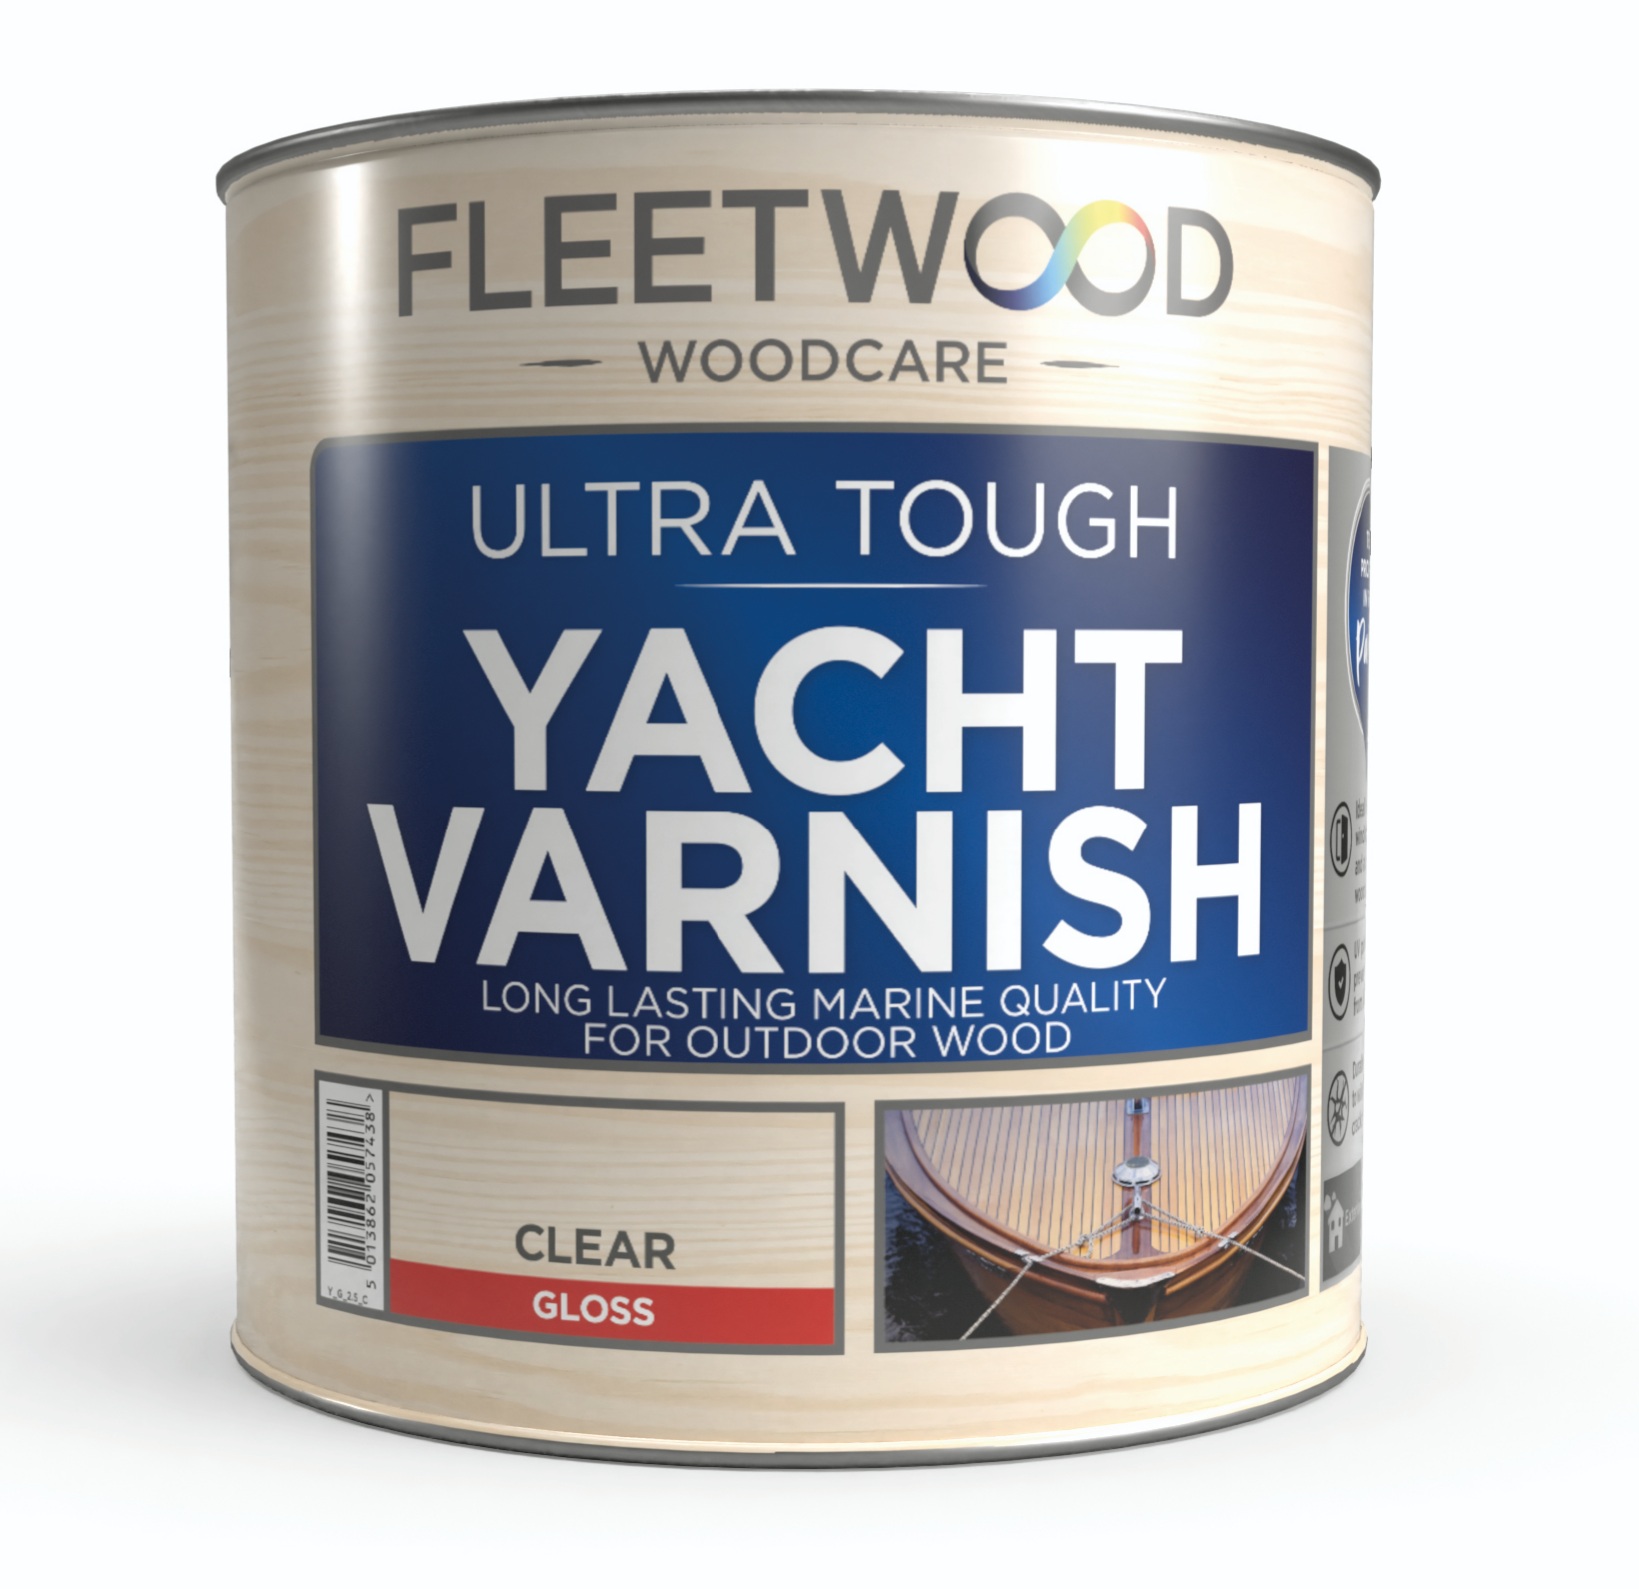 will yacht varnish seal plywood